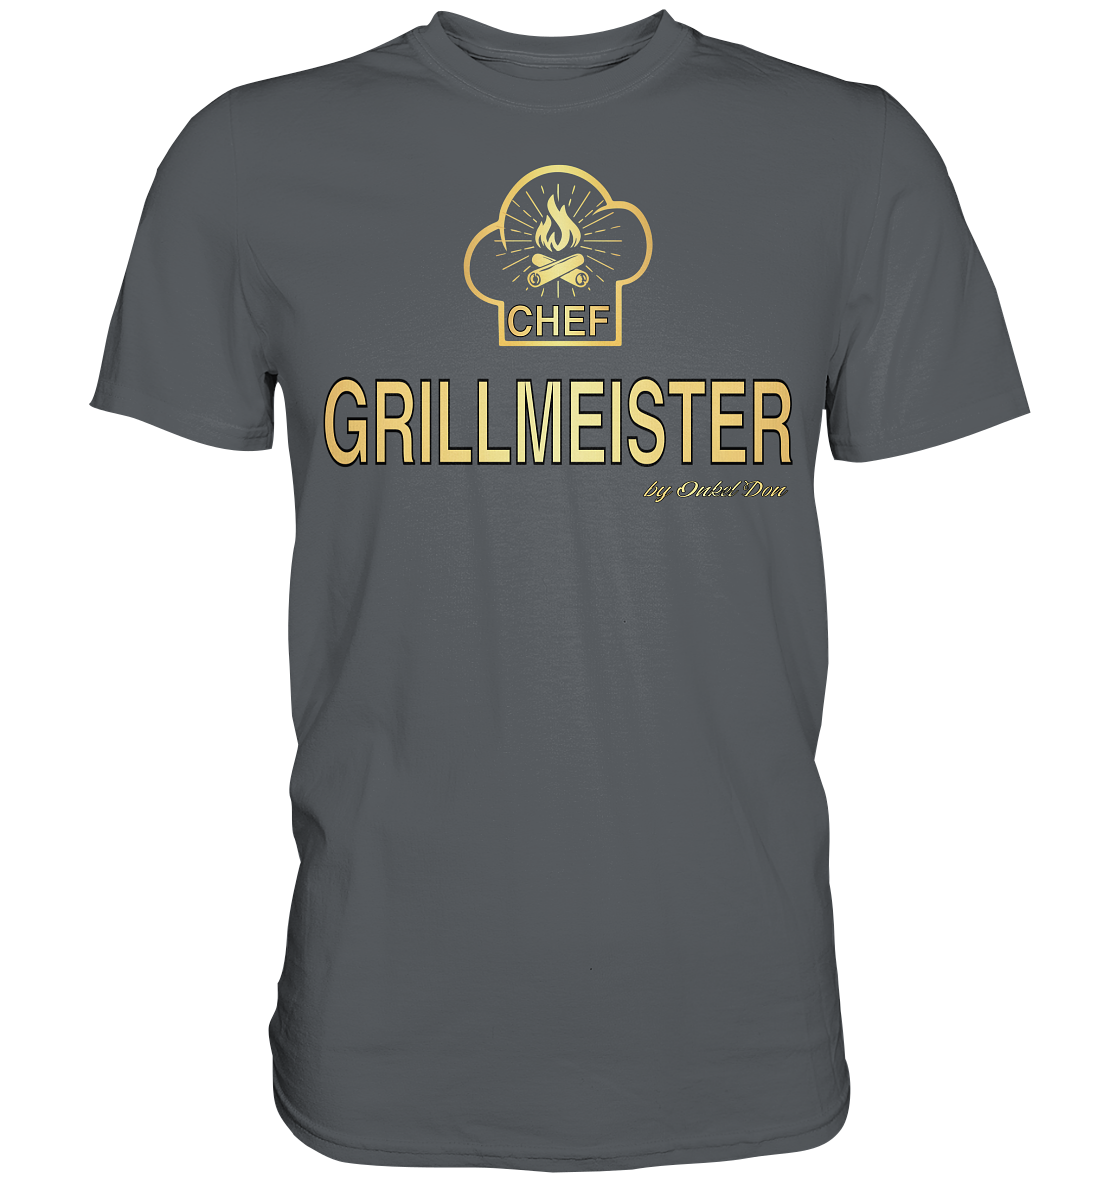 Grillmeister#3 - Herren Shirt - Onkel Don